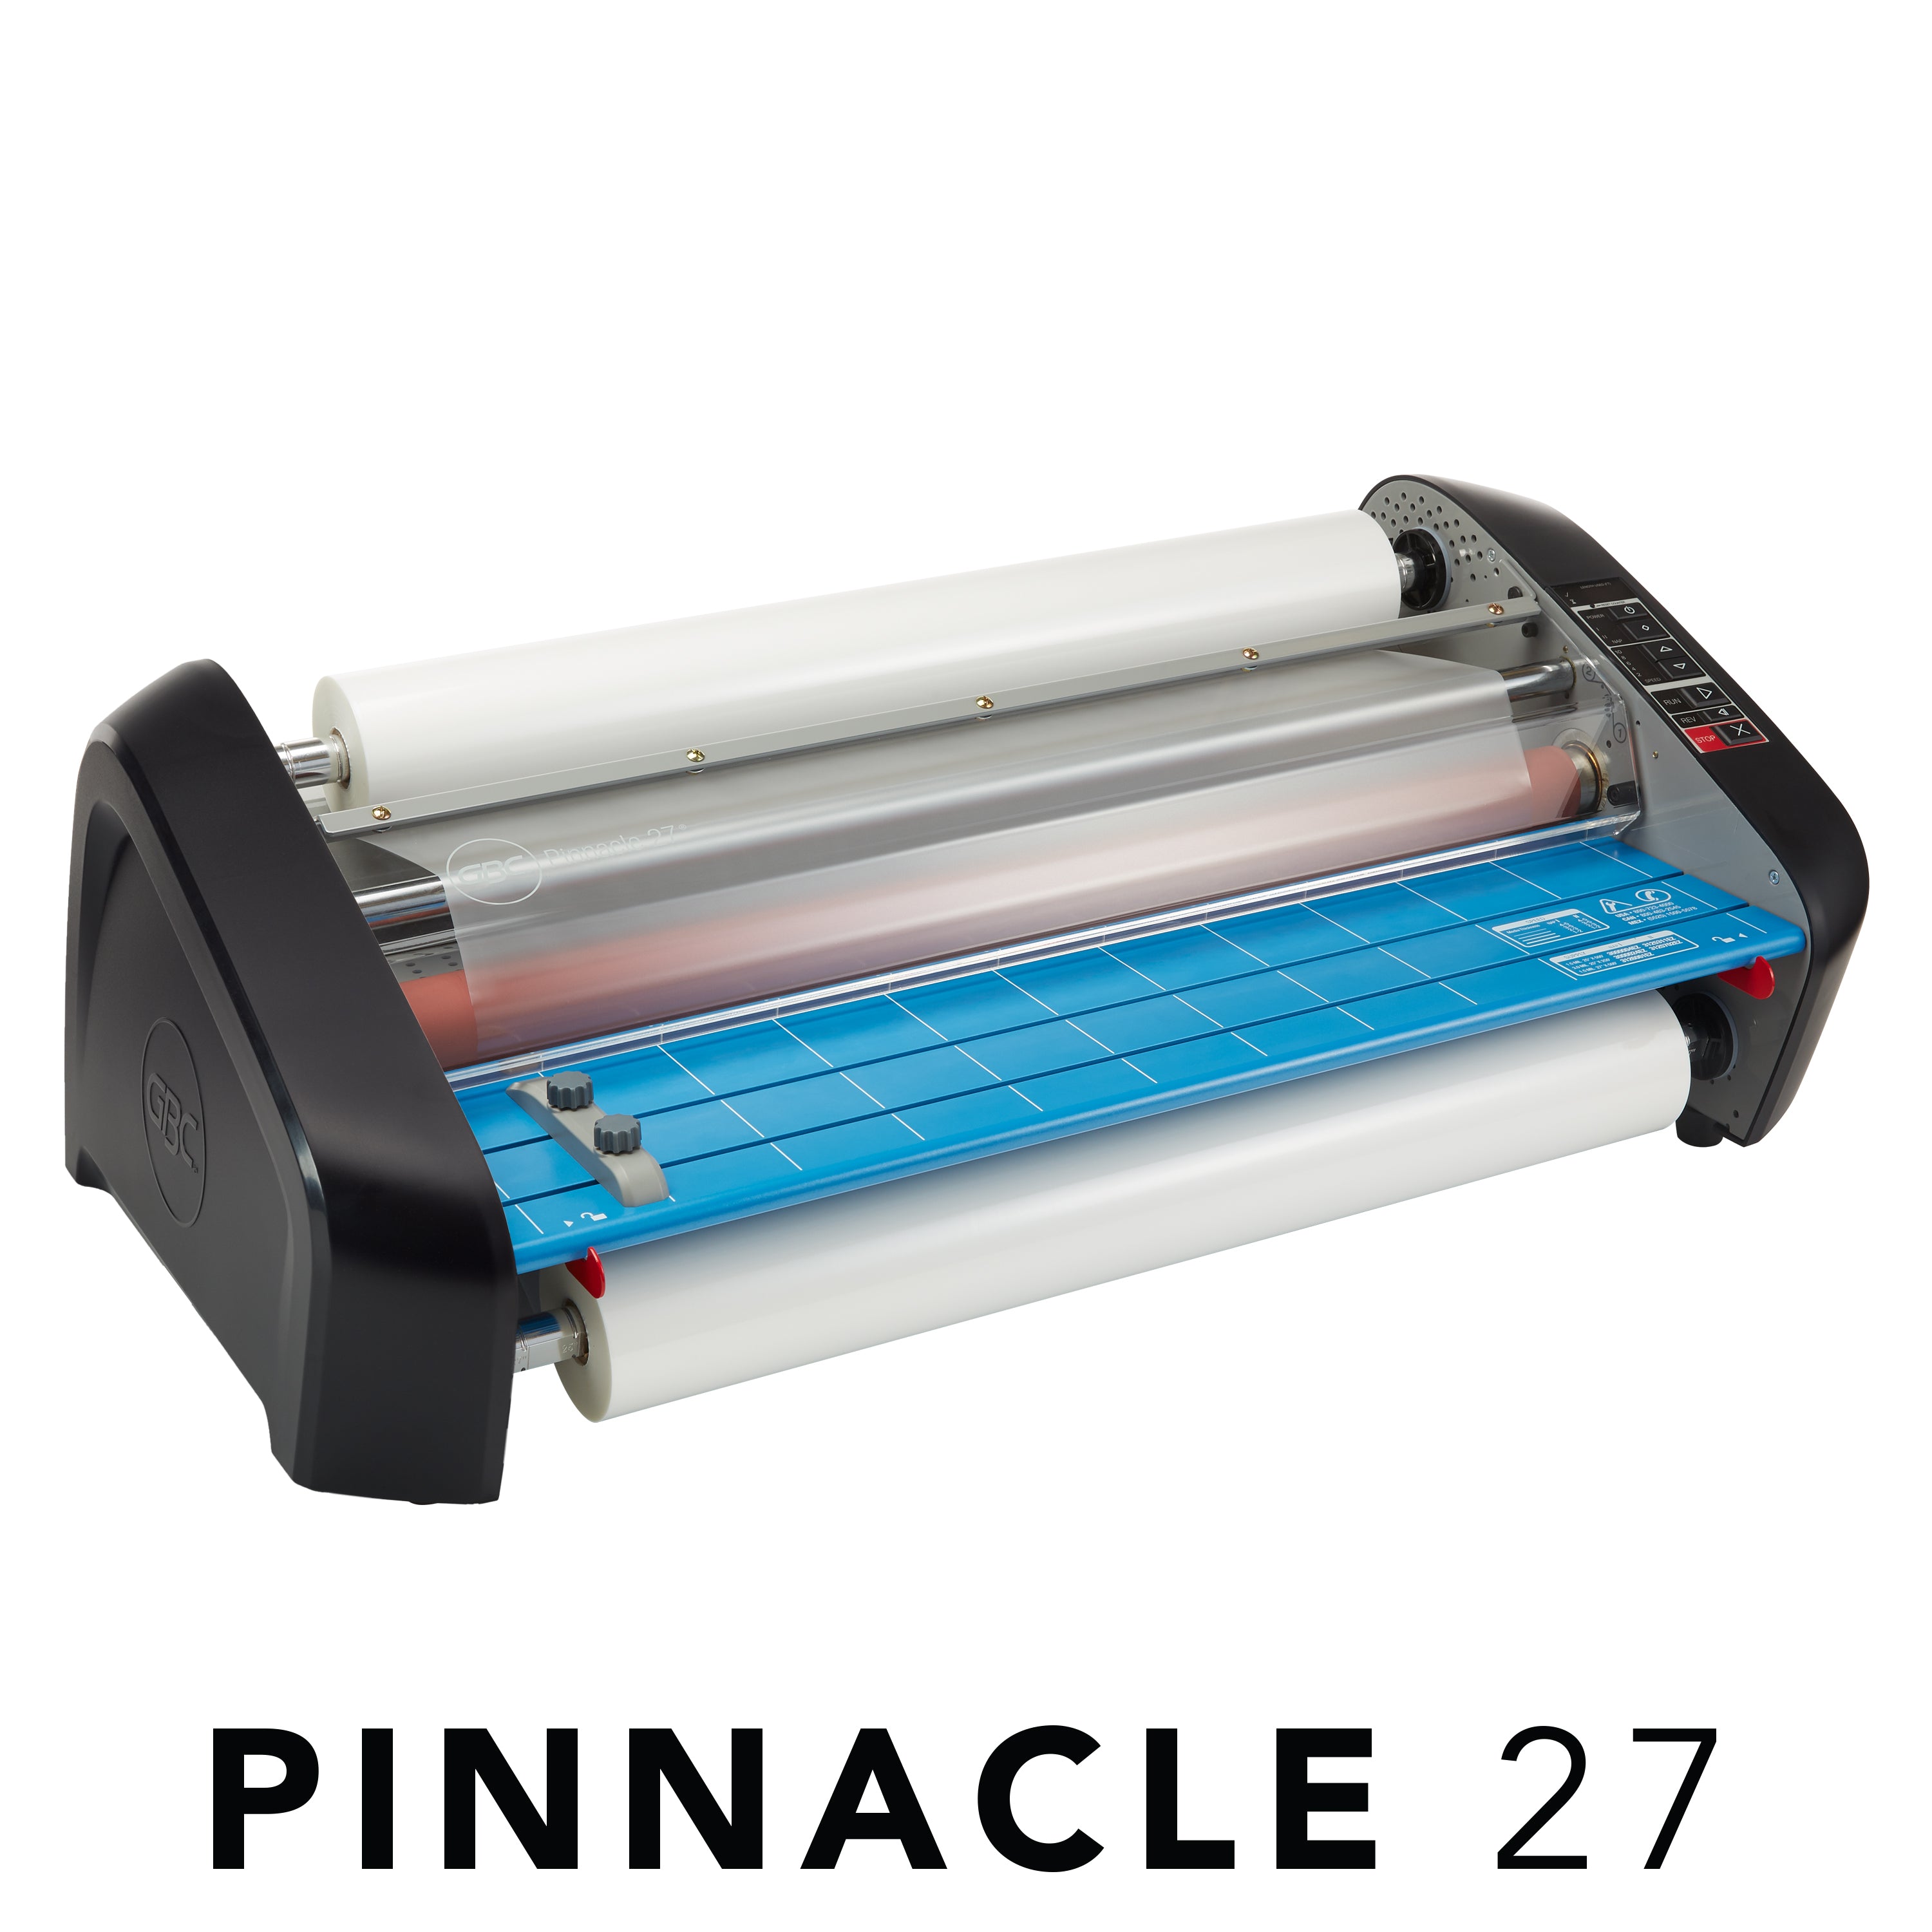 GBC HeatSeal Pinnacle 27 Thermal Roll Laminator